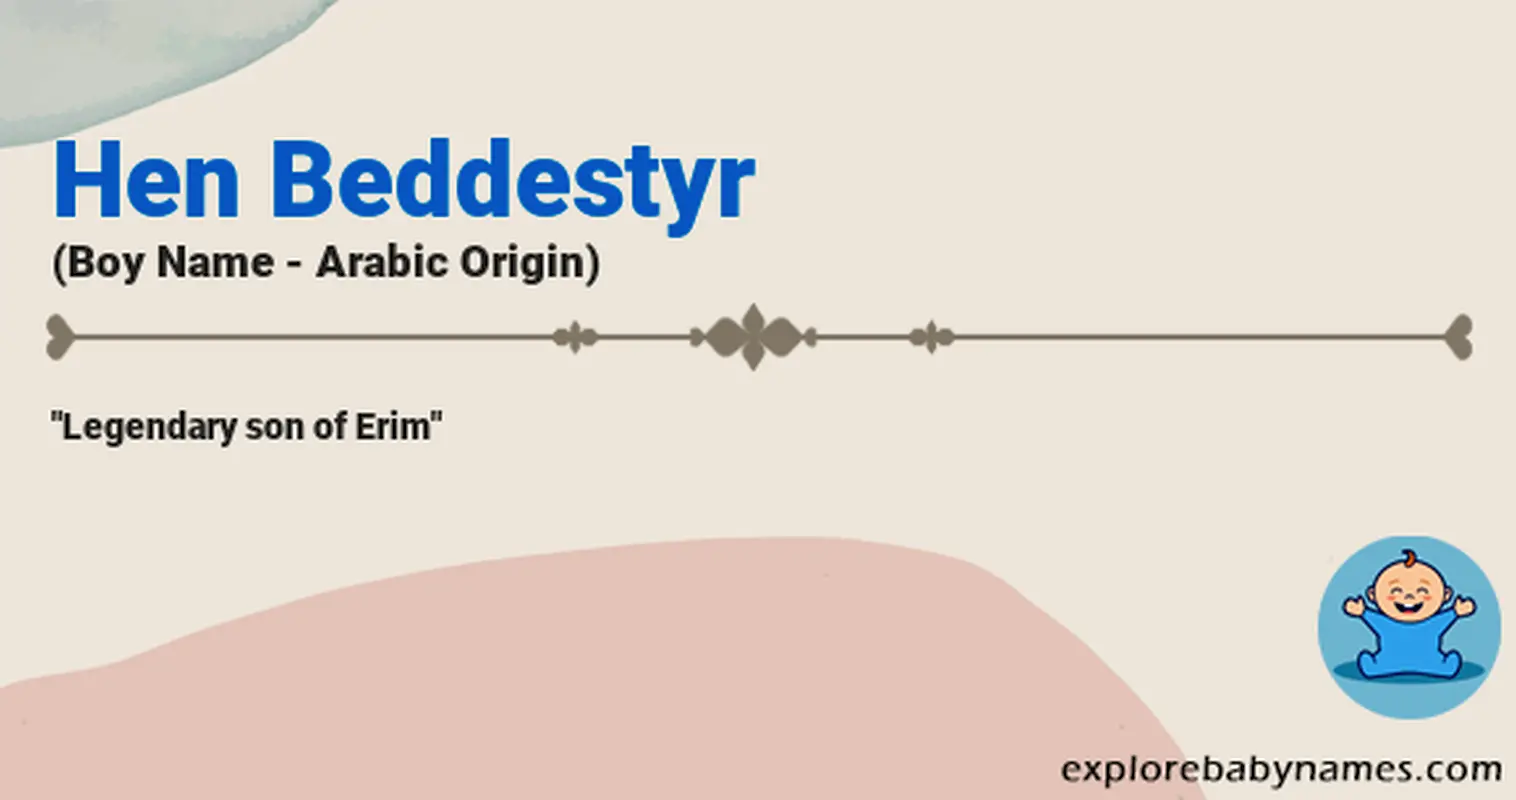 Meaning of Hen Beddestyr